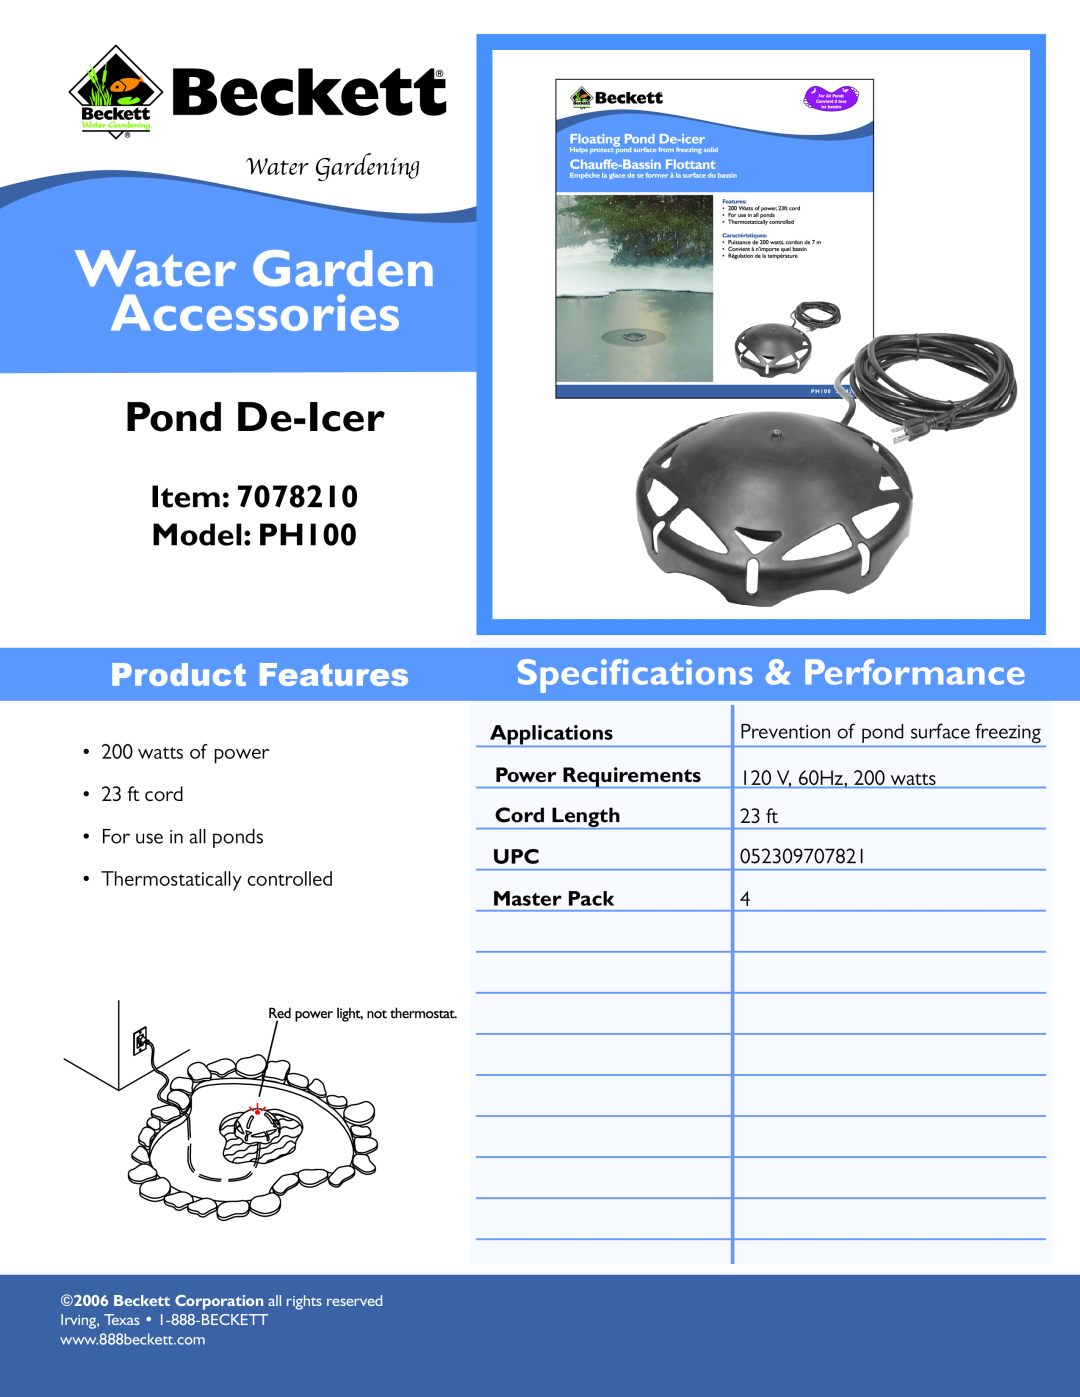 Beckett Water Gardening PH100 specifications Water Garden Accessories, Pond De-Icer, Speciﬁcations & Performance, 23 ft 